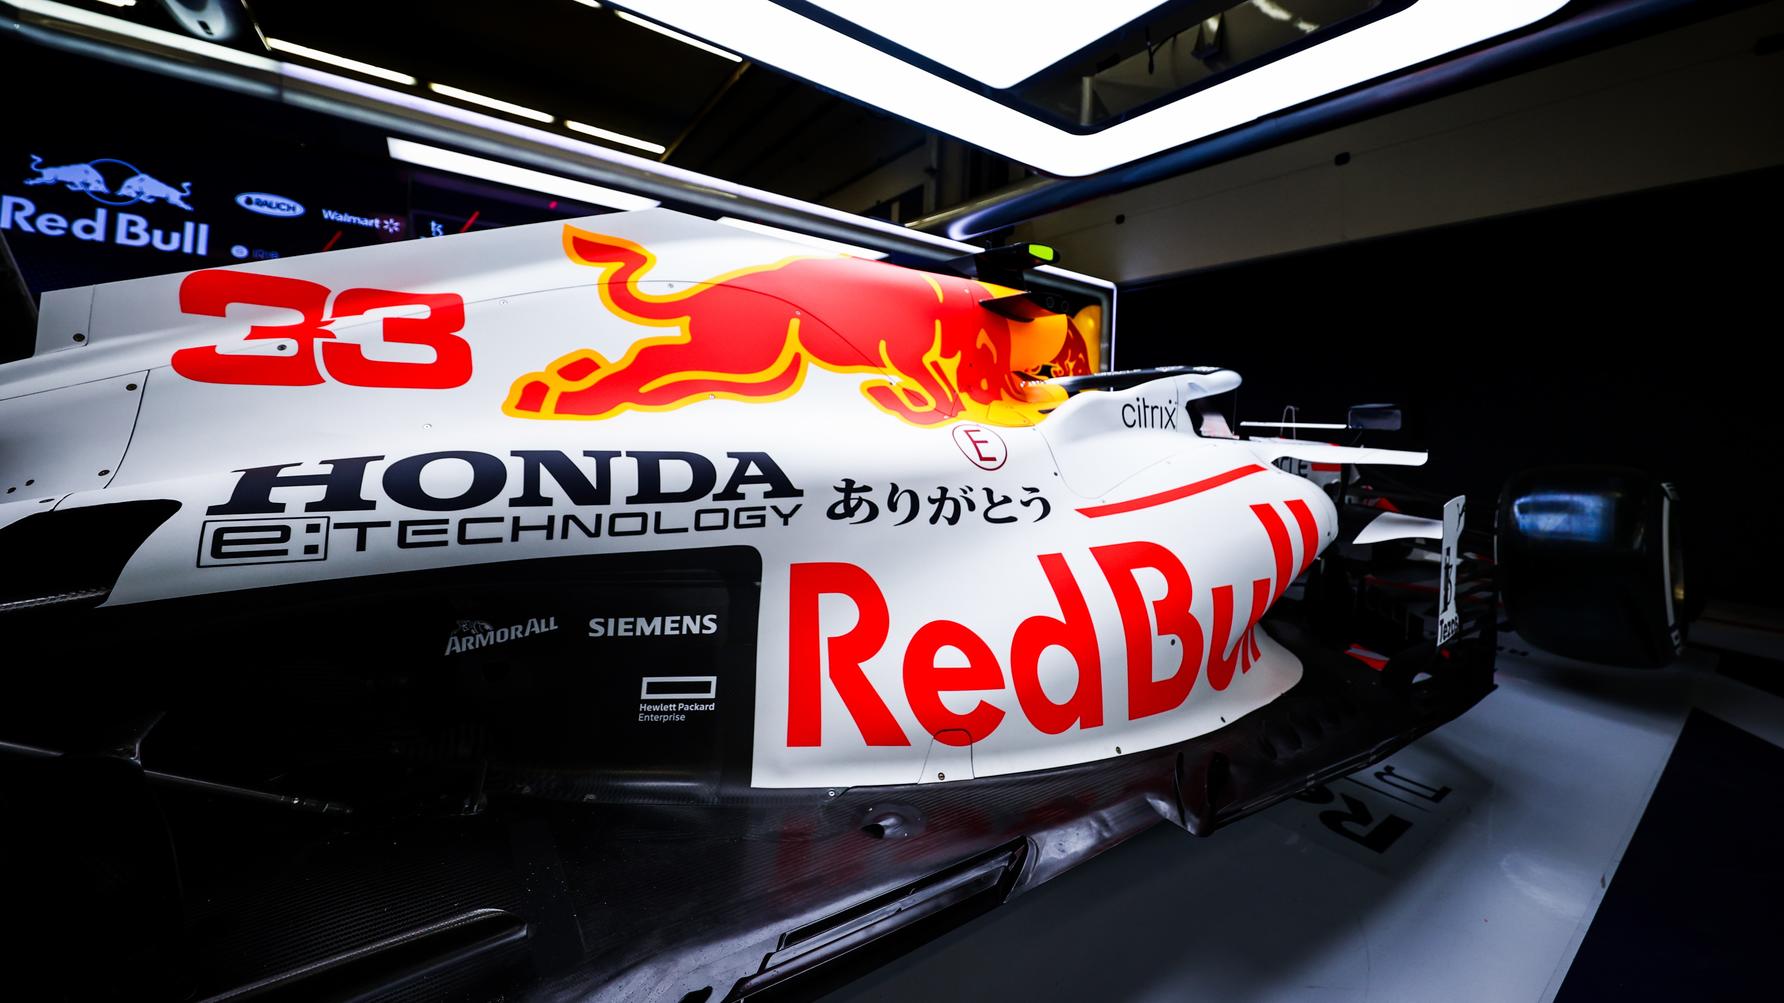 Honda brand name and logo on Red Bull's Formula One car